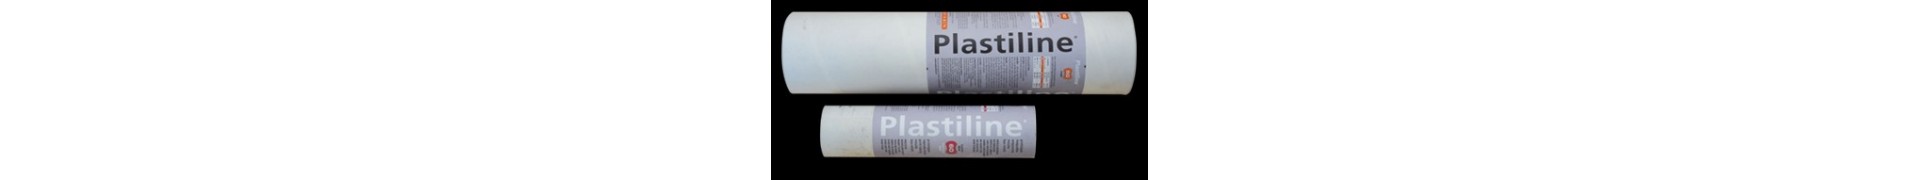 PLASTILINE HERBIN 40 1 Kg TRES SOUPLE PLASTILINE GRISE 